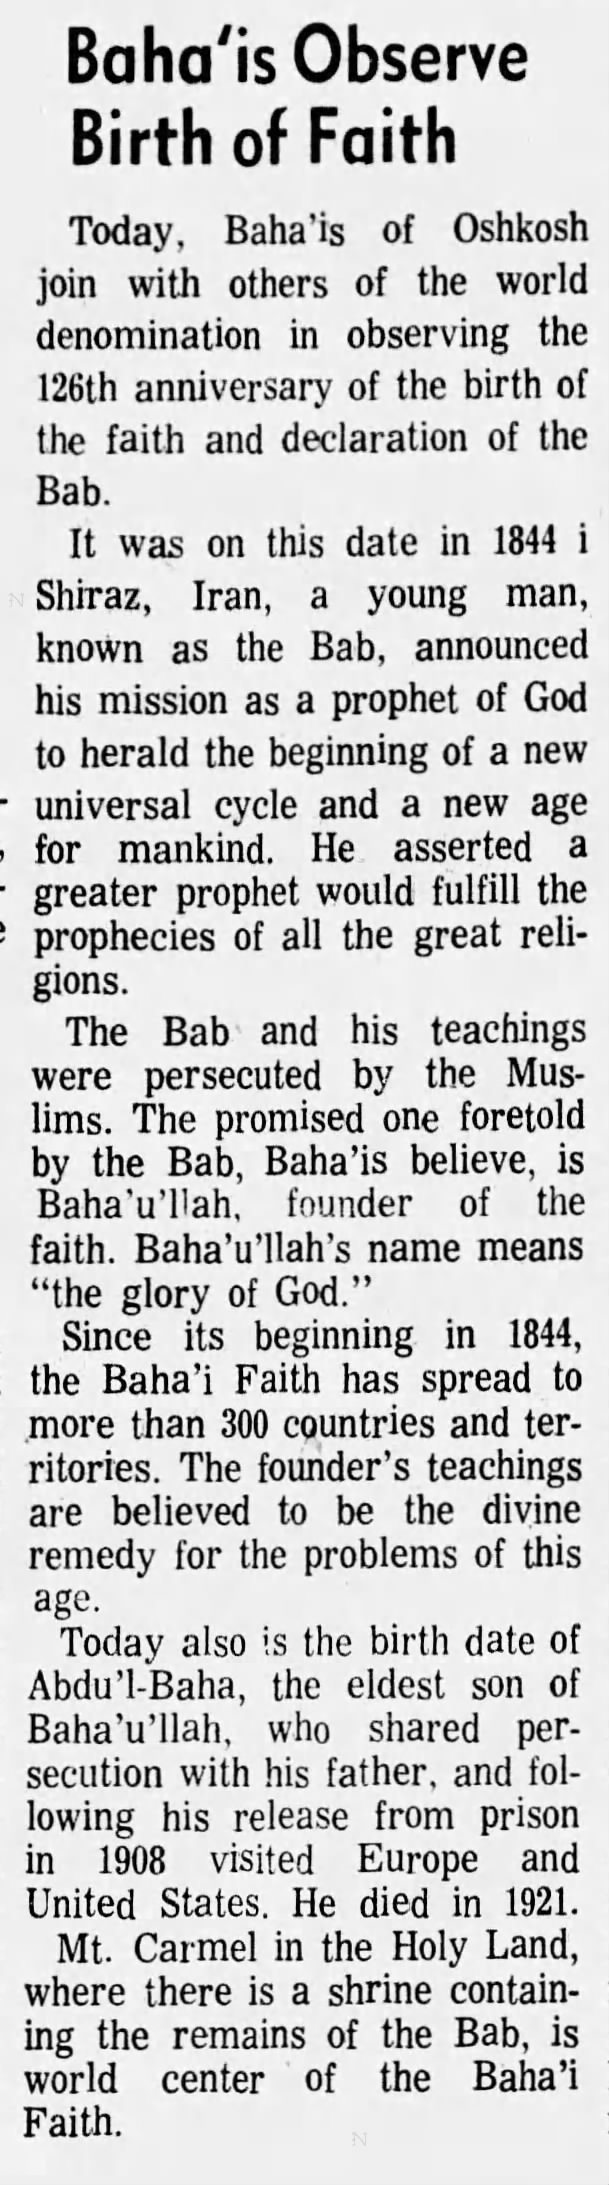 Baha'i observance and profile